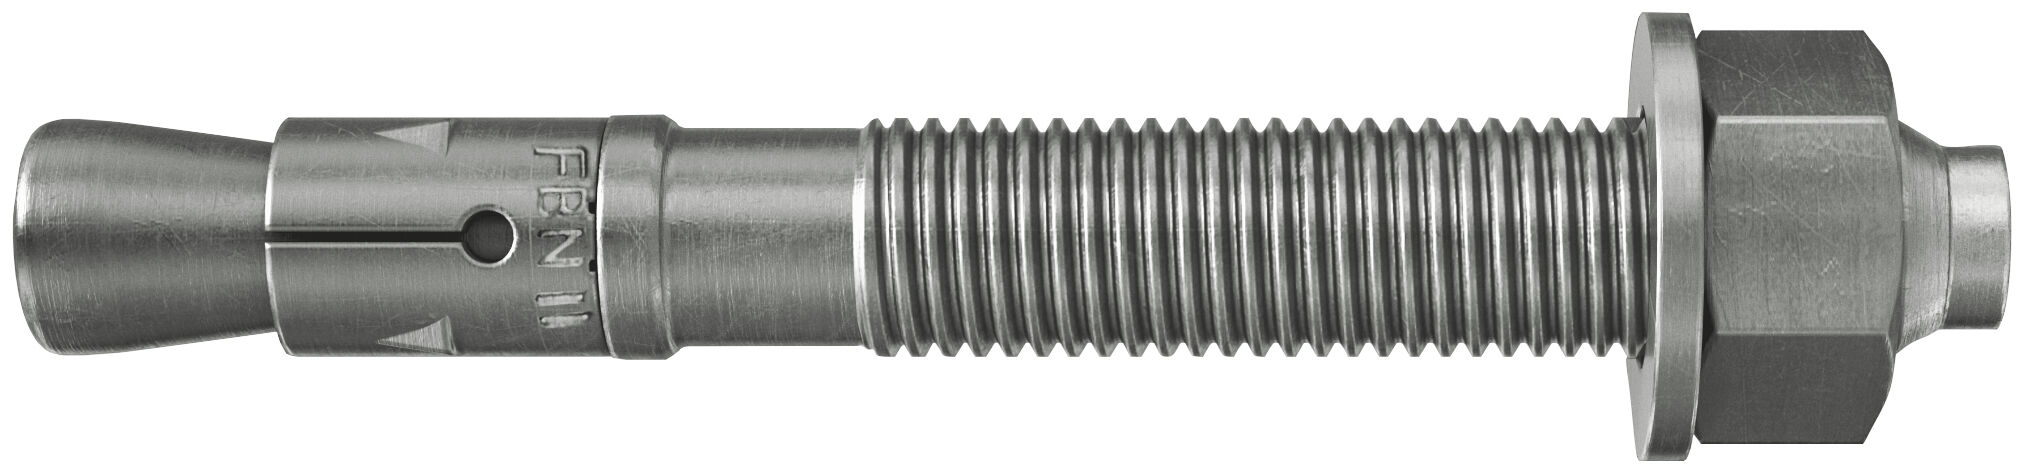 fischer bolt anchor FBN II 8/10 R stainless steel